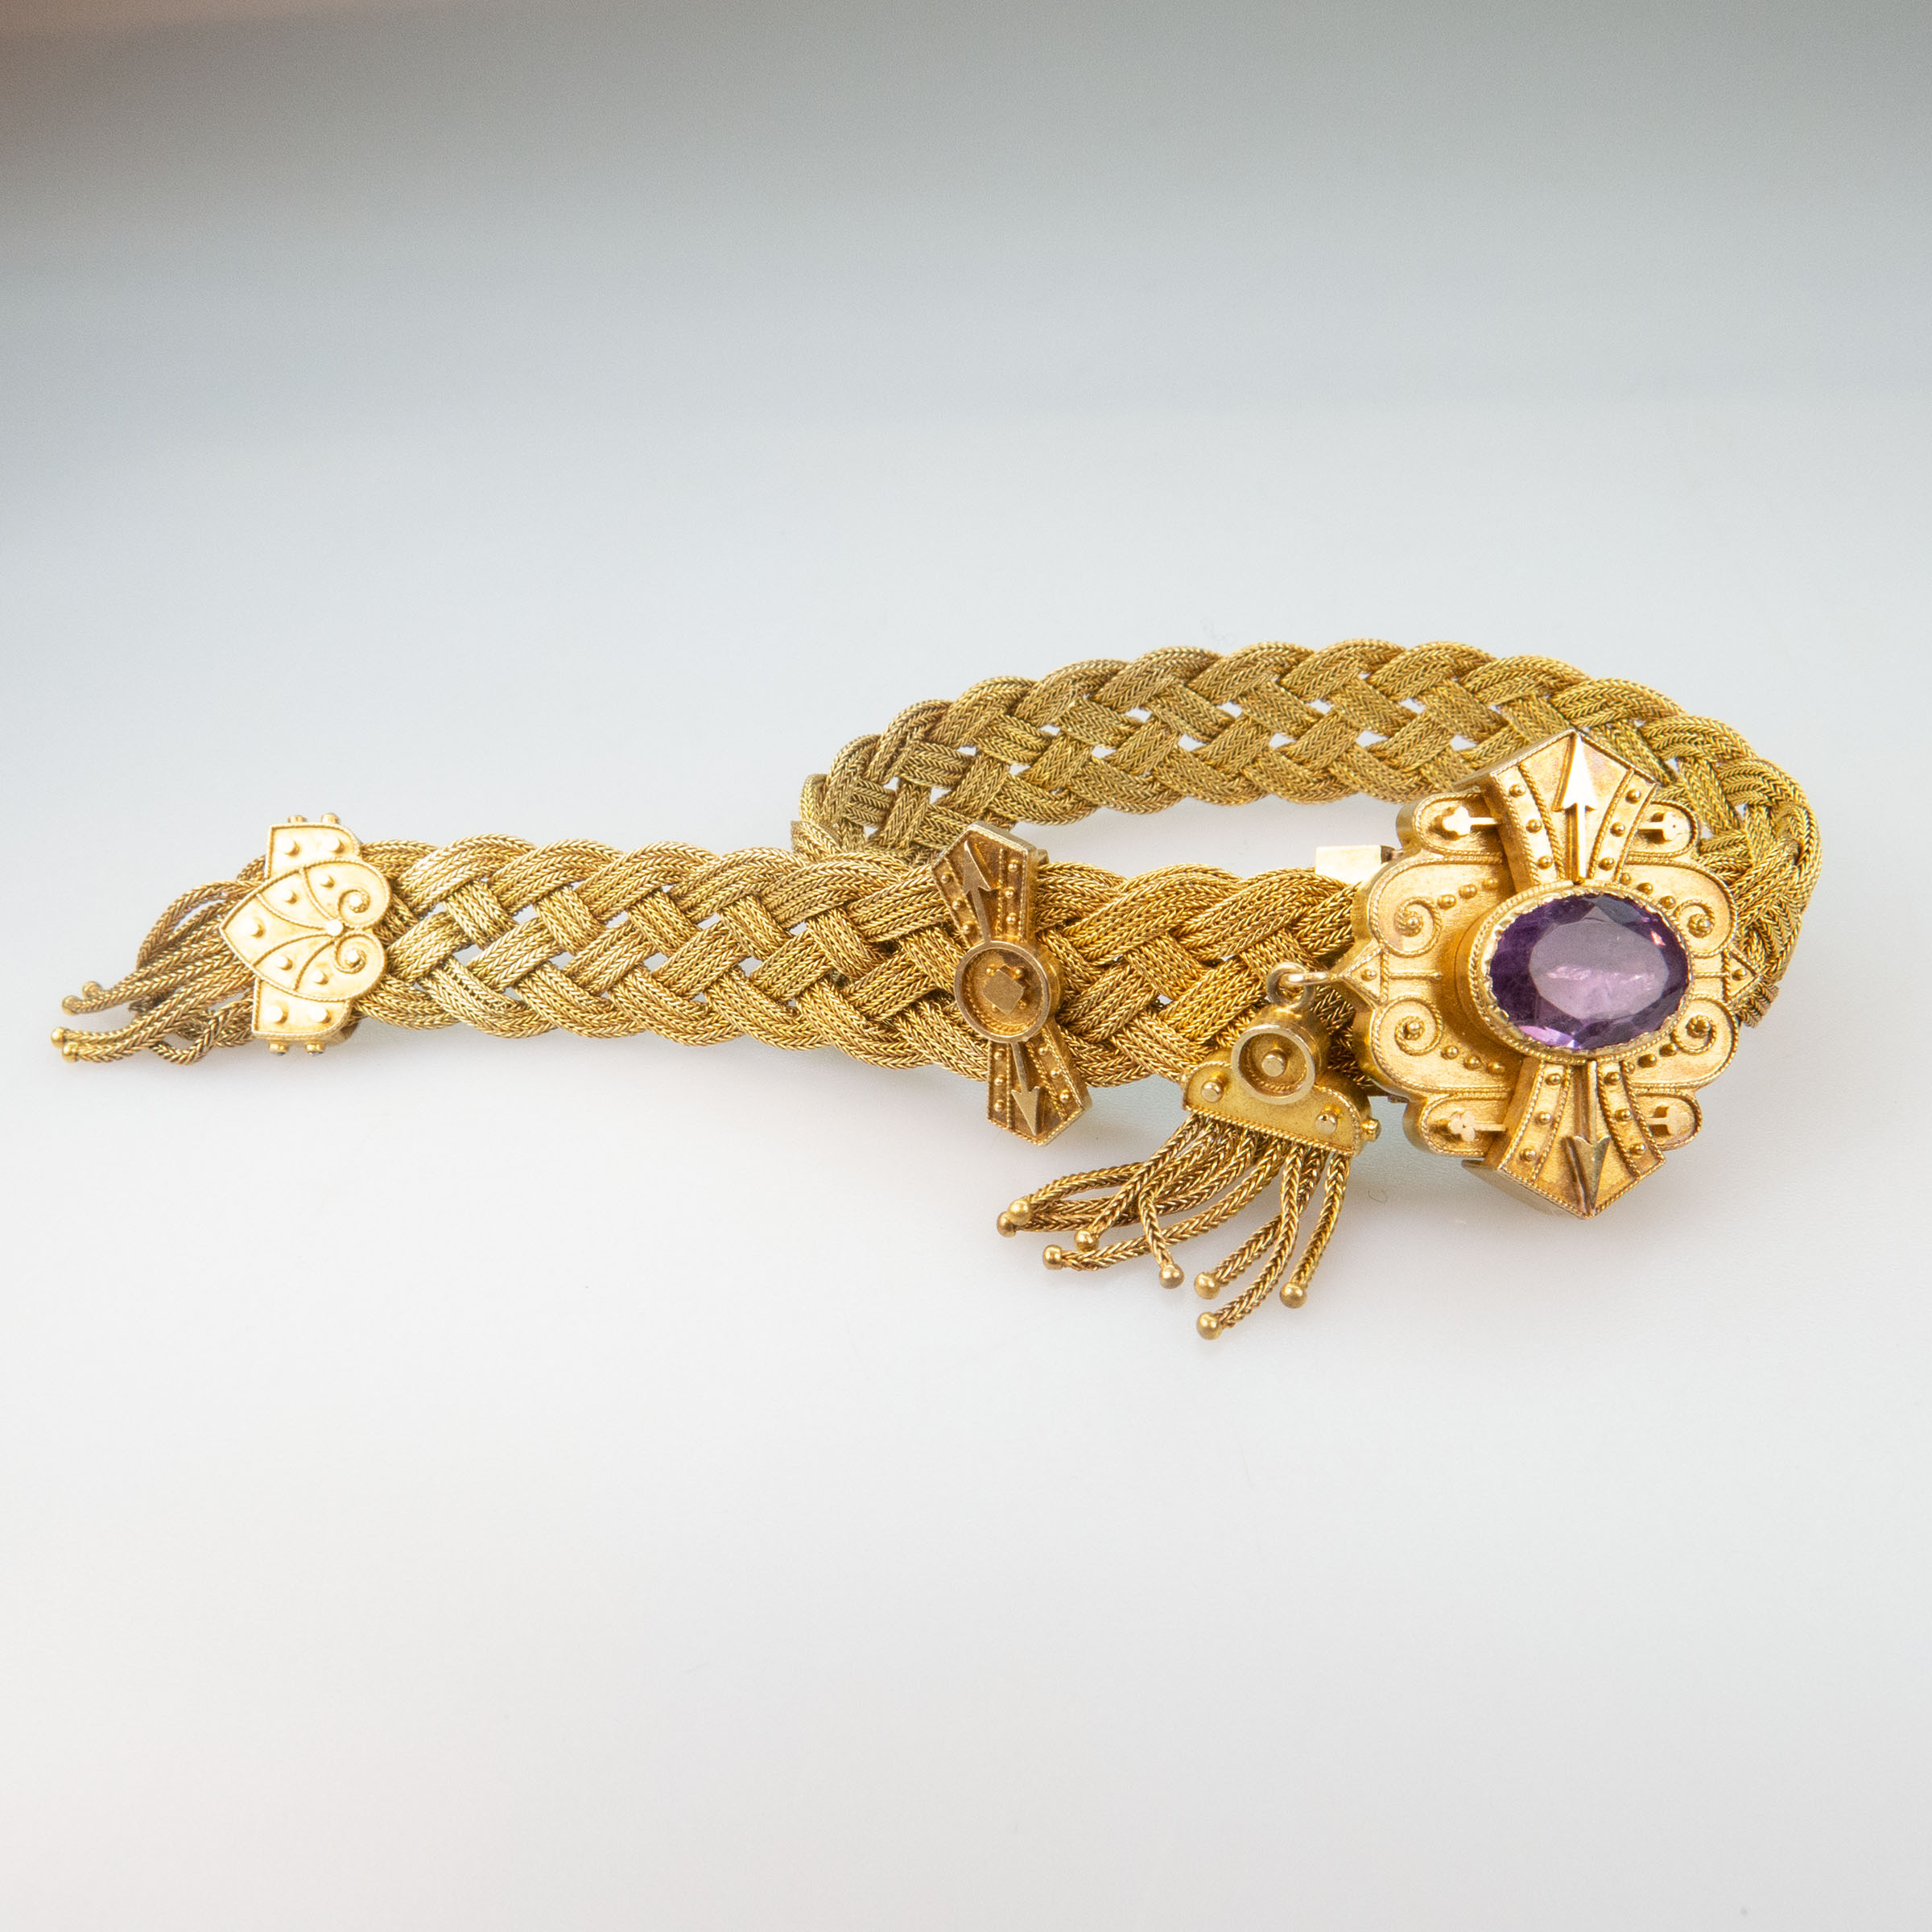 19th Century 14k Yellow Gold Braided Slide Strap Bracelet